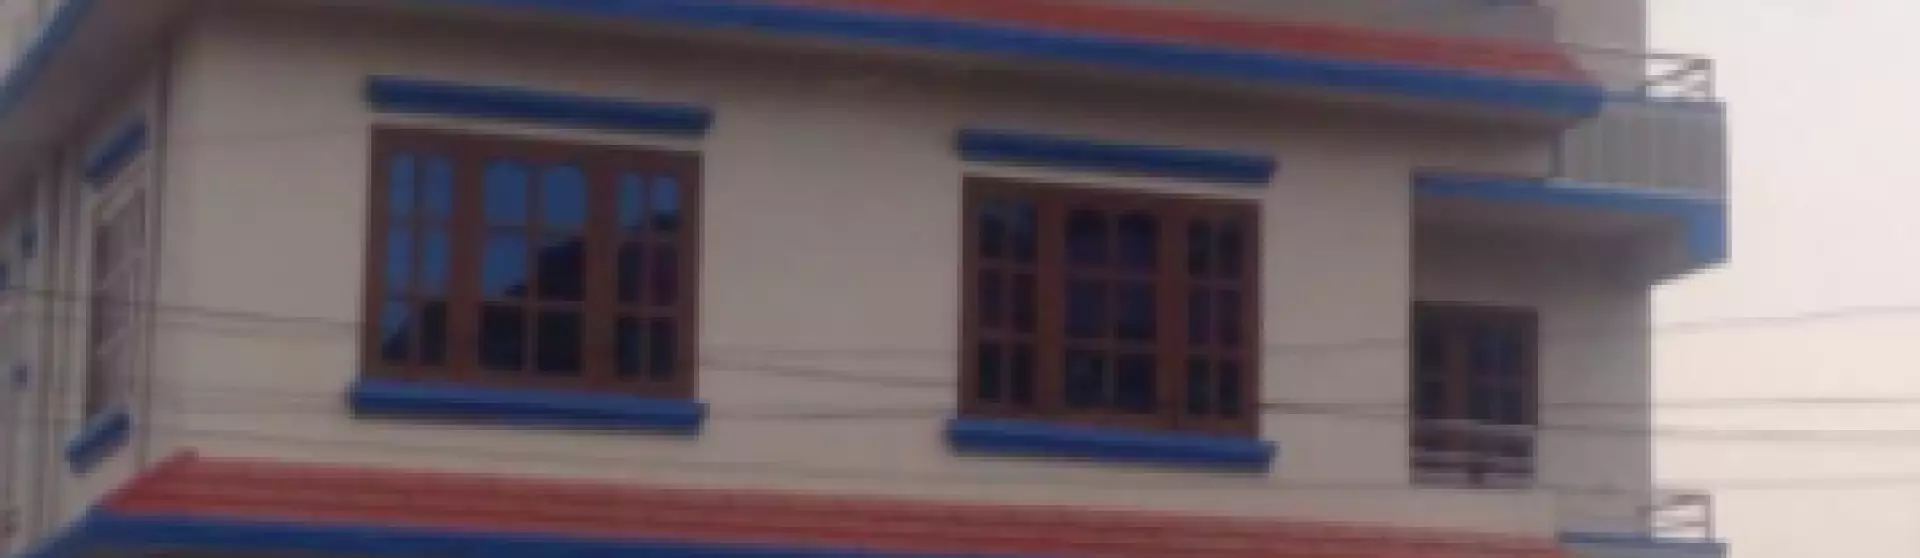 Lubhu, Ward No. 5, Mahalaxmi Municipality, Lalitpur, Pradesh 3 Nepal, 7 Bedrooms Bedrooms, 13 Rooms Rooms,3 BathroomsBathrooms,House,For sale,8295